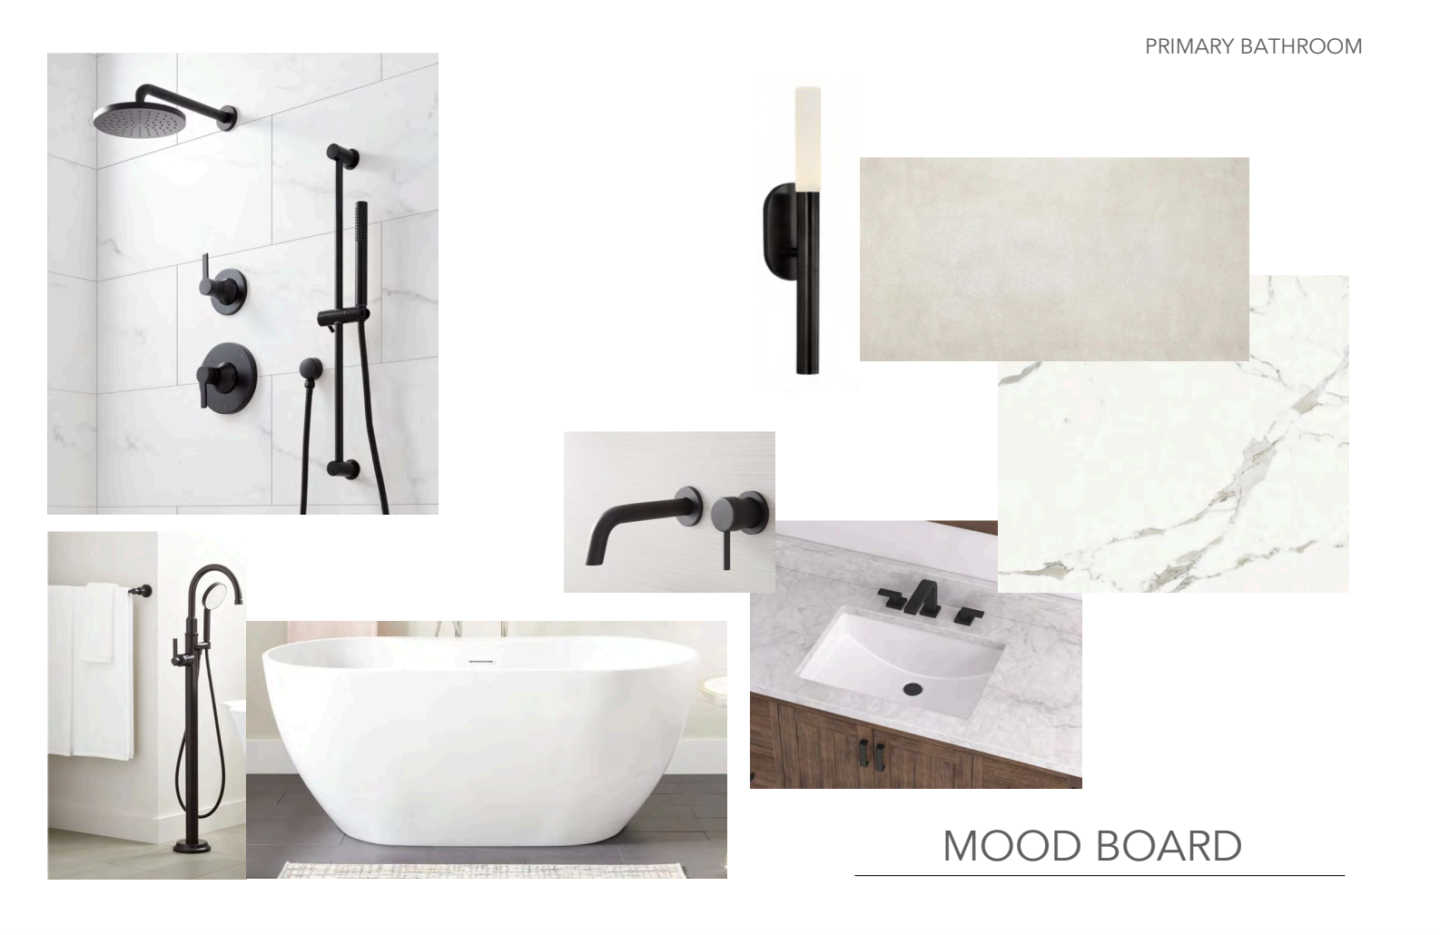 Phase I : Main Level Remodel | Mood Board Inspiration - Primary Bathroom